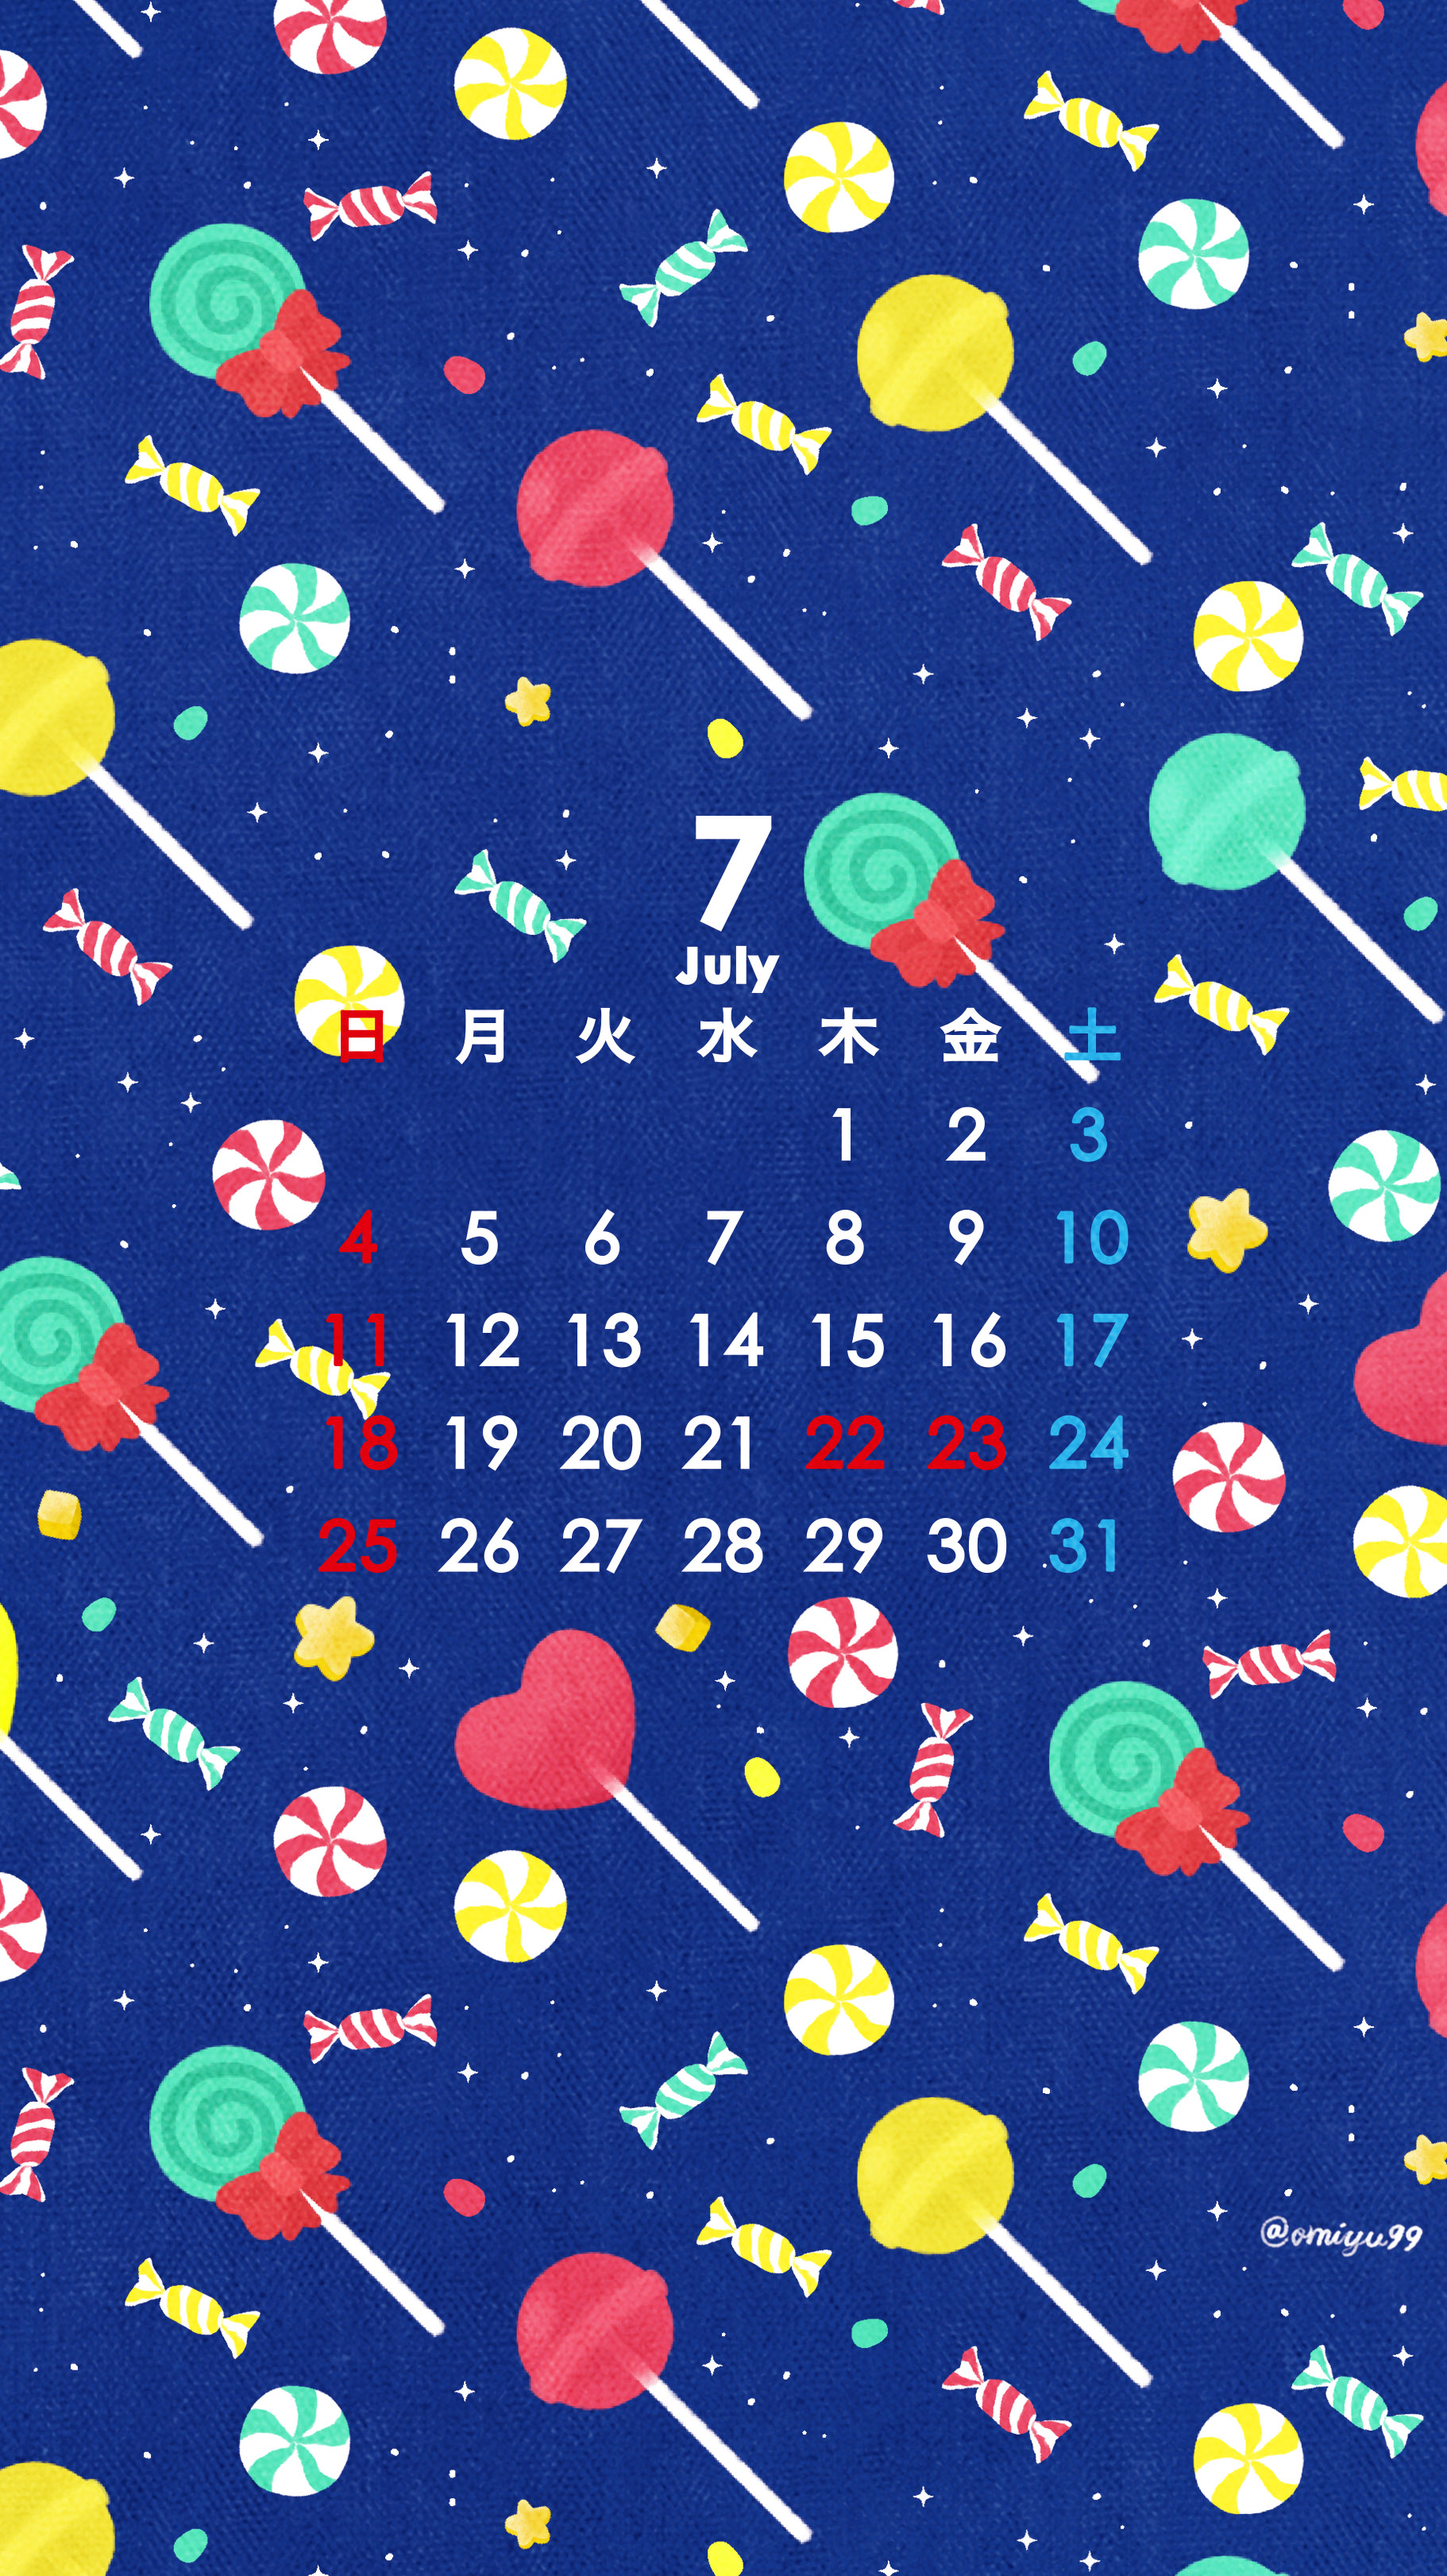 Omiyu A Twitter 飴ちゃんな壁紙カレンダー 21年7月 Illust Illustration 壁紙 イラスト Iphone壁紙 キャンディ 飴 食べ物 Candy Lollipop T Co O5xl8dzupk Twitter